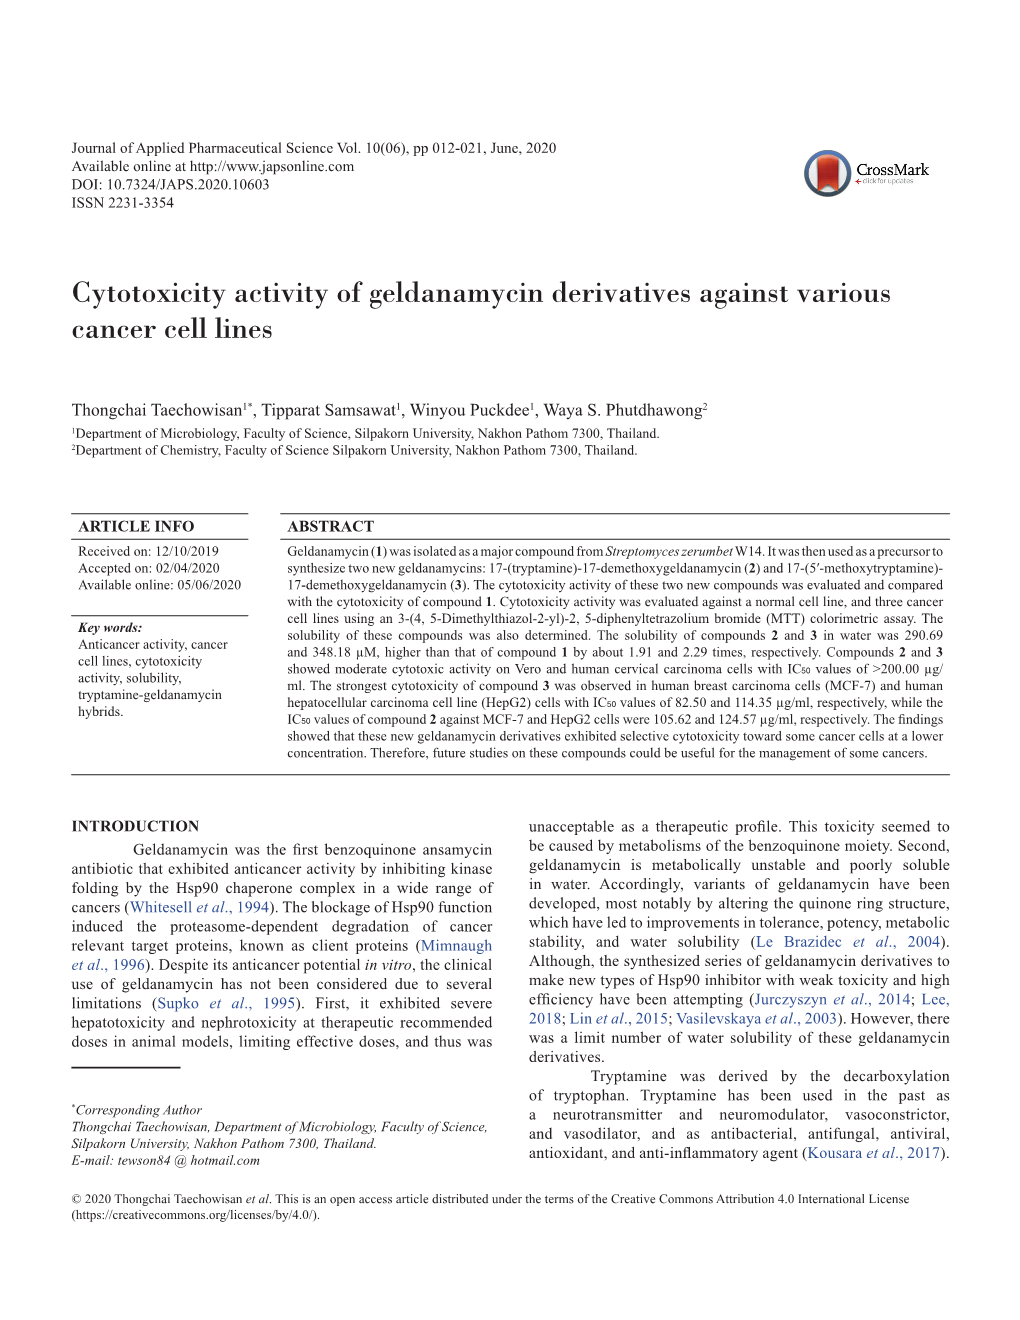 Cytotoxicity Activity of Geldanamycin Derivatives Against Various Cancer Cell Lines